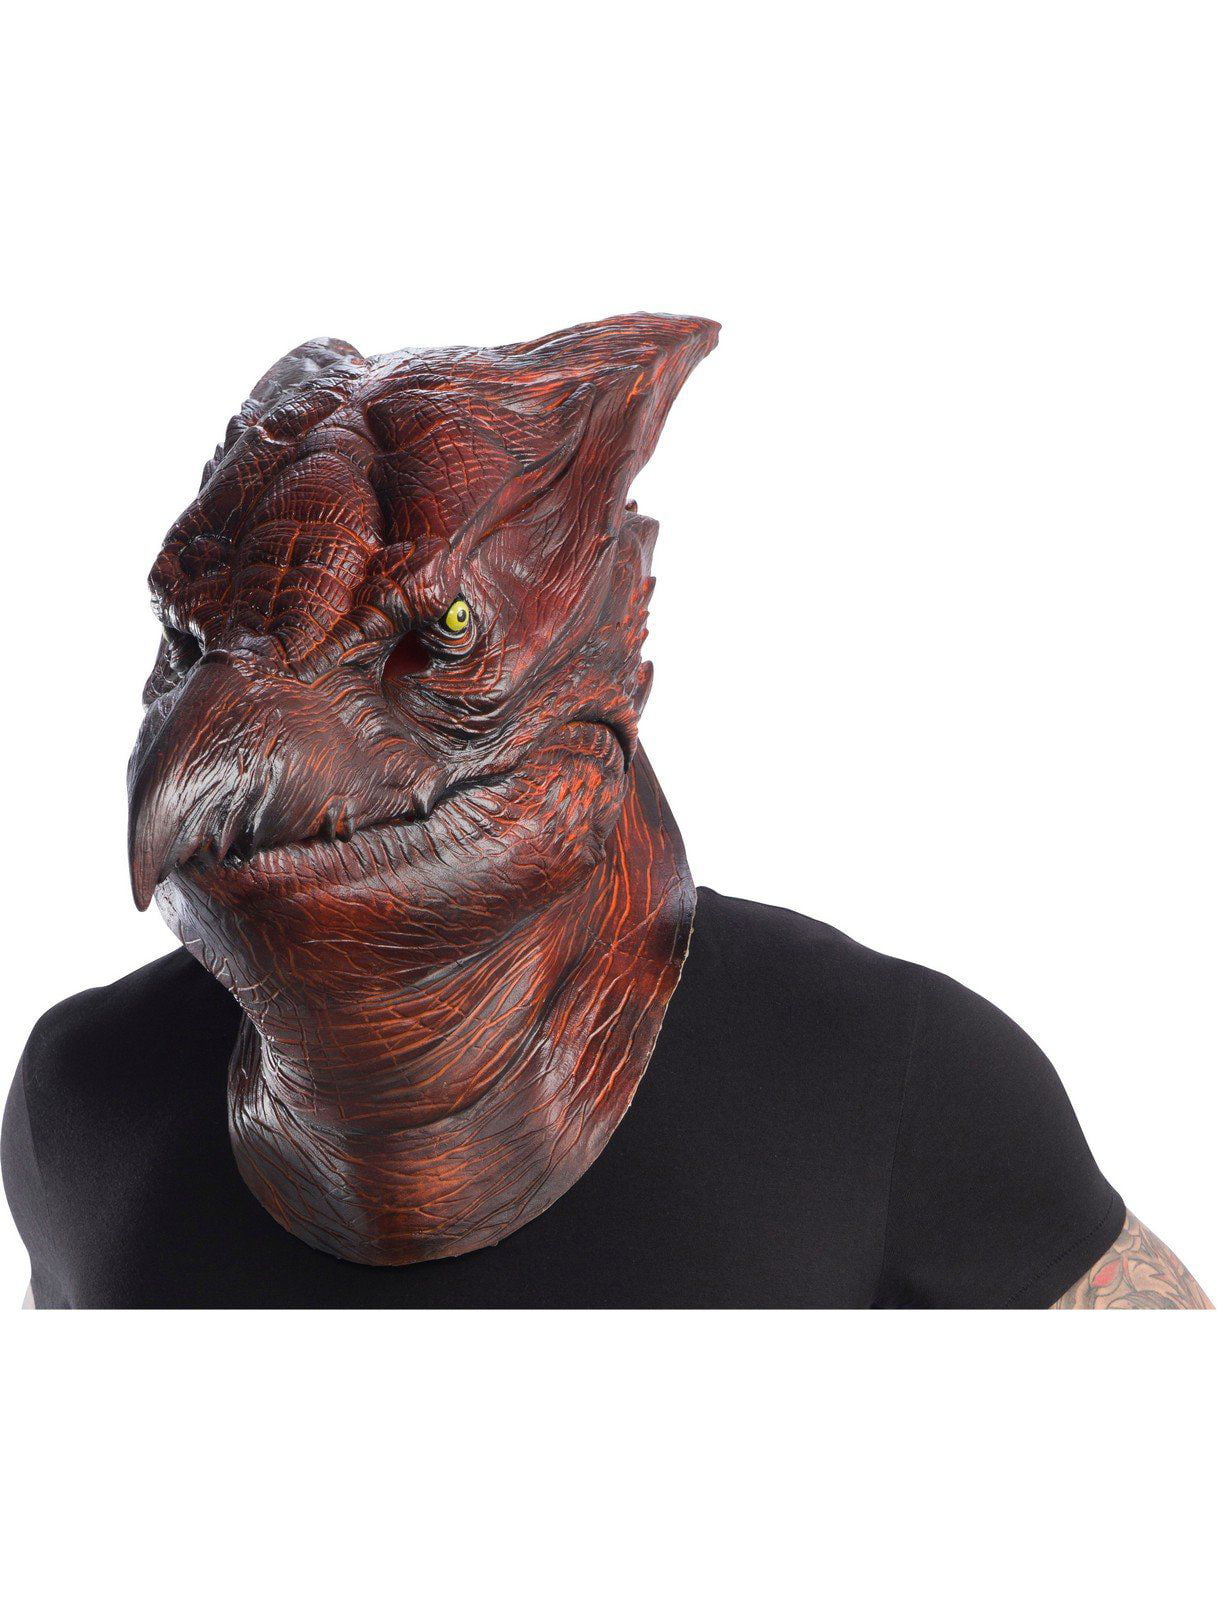 King of Monsters Rodan Overhead Mask - Walmart.com